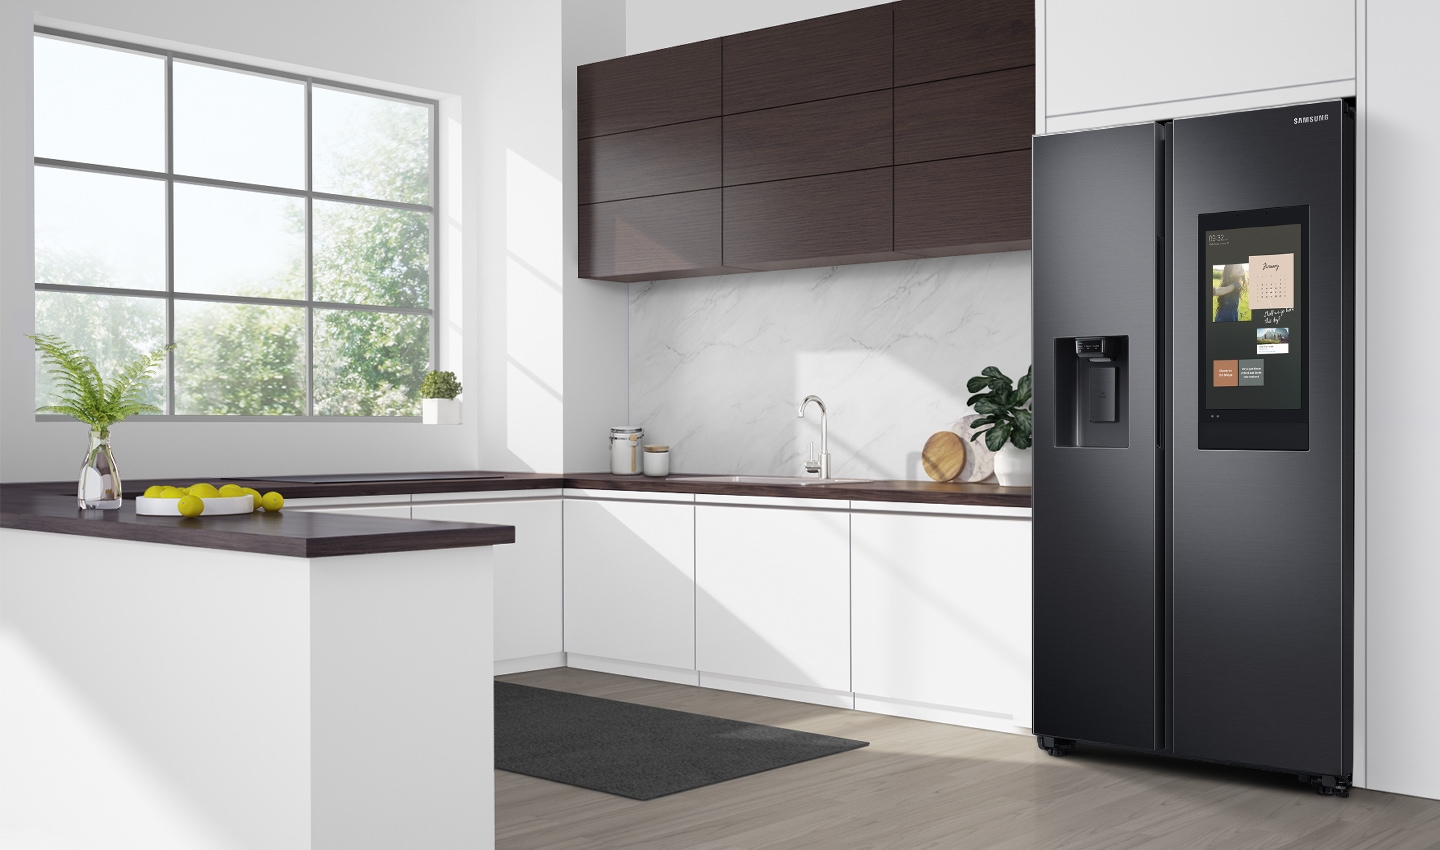 Samsung Family Hub Refrigerator Stylish Design